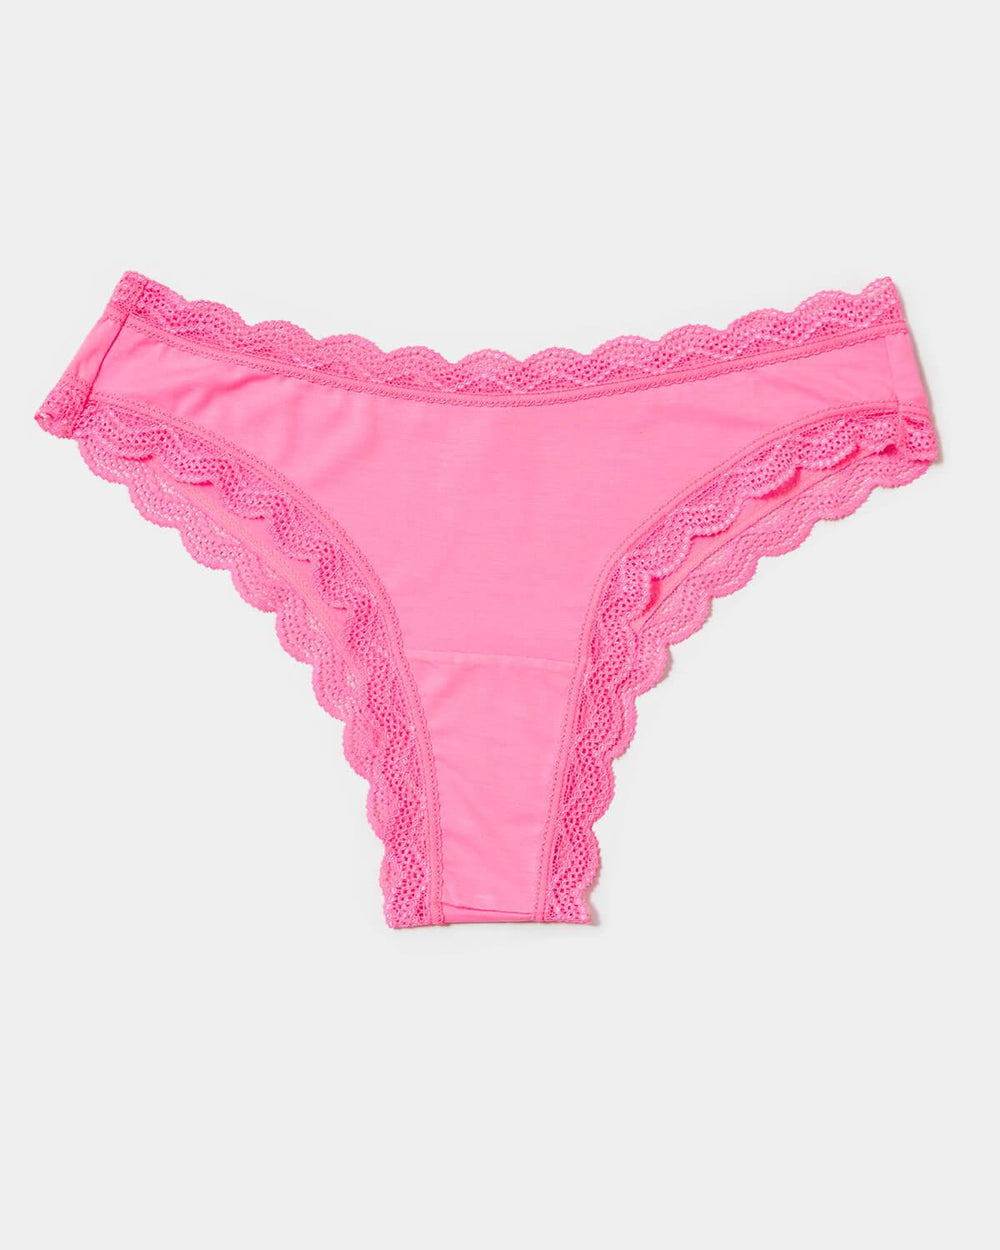 Leopard Print Sexy Briefs Lace Edge Underwear Soft Women's Pink Cute Panties